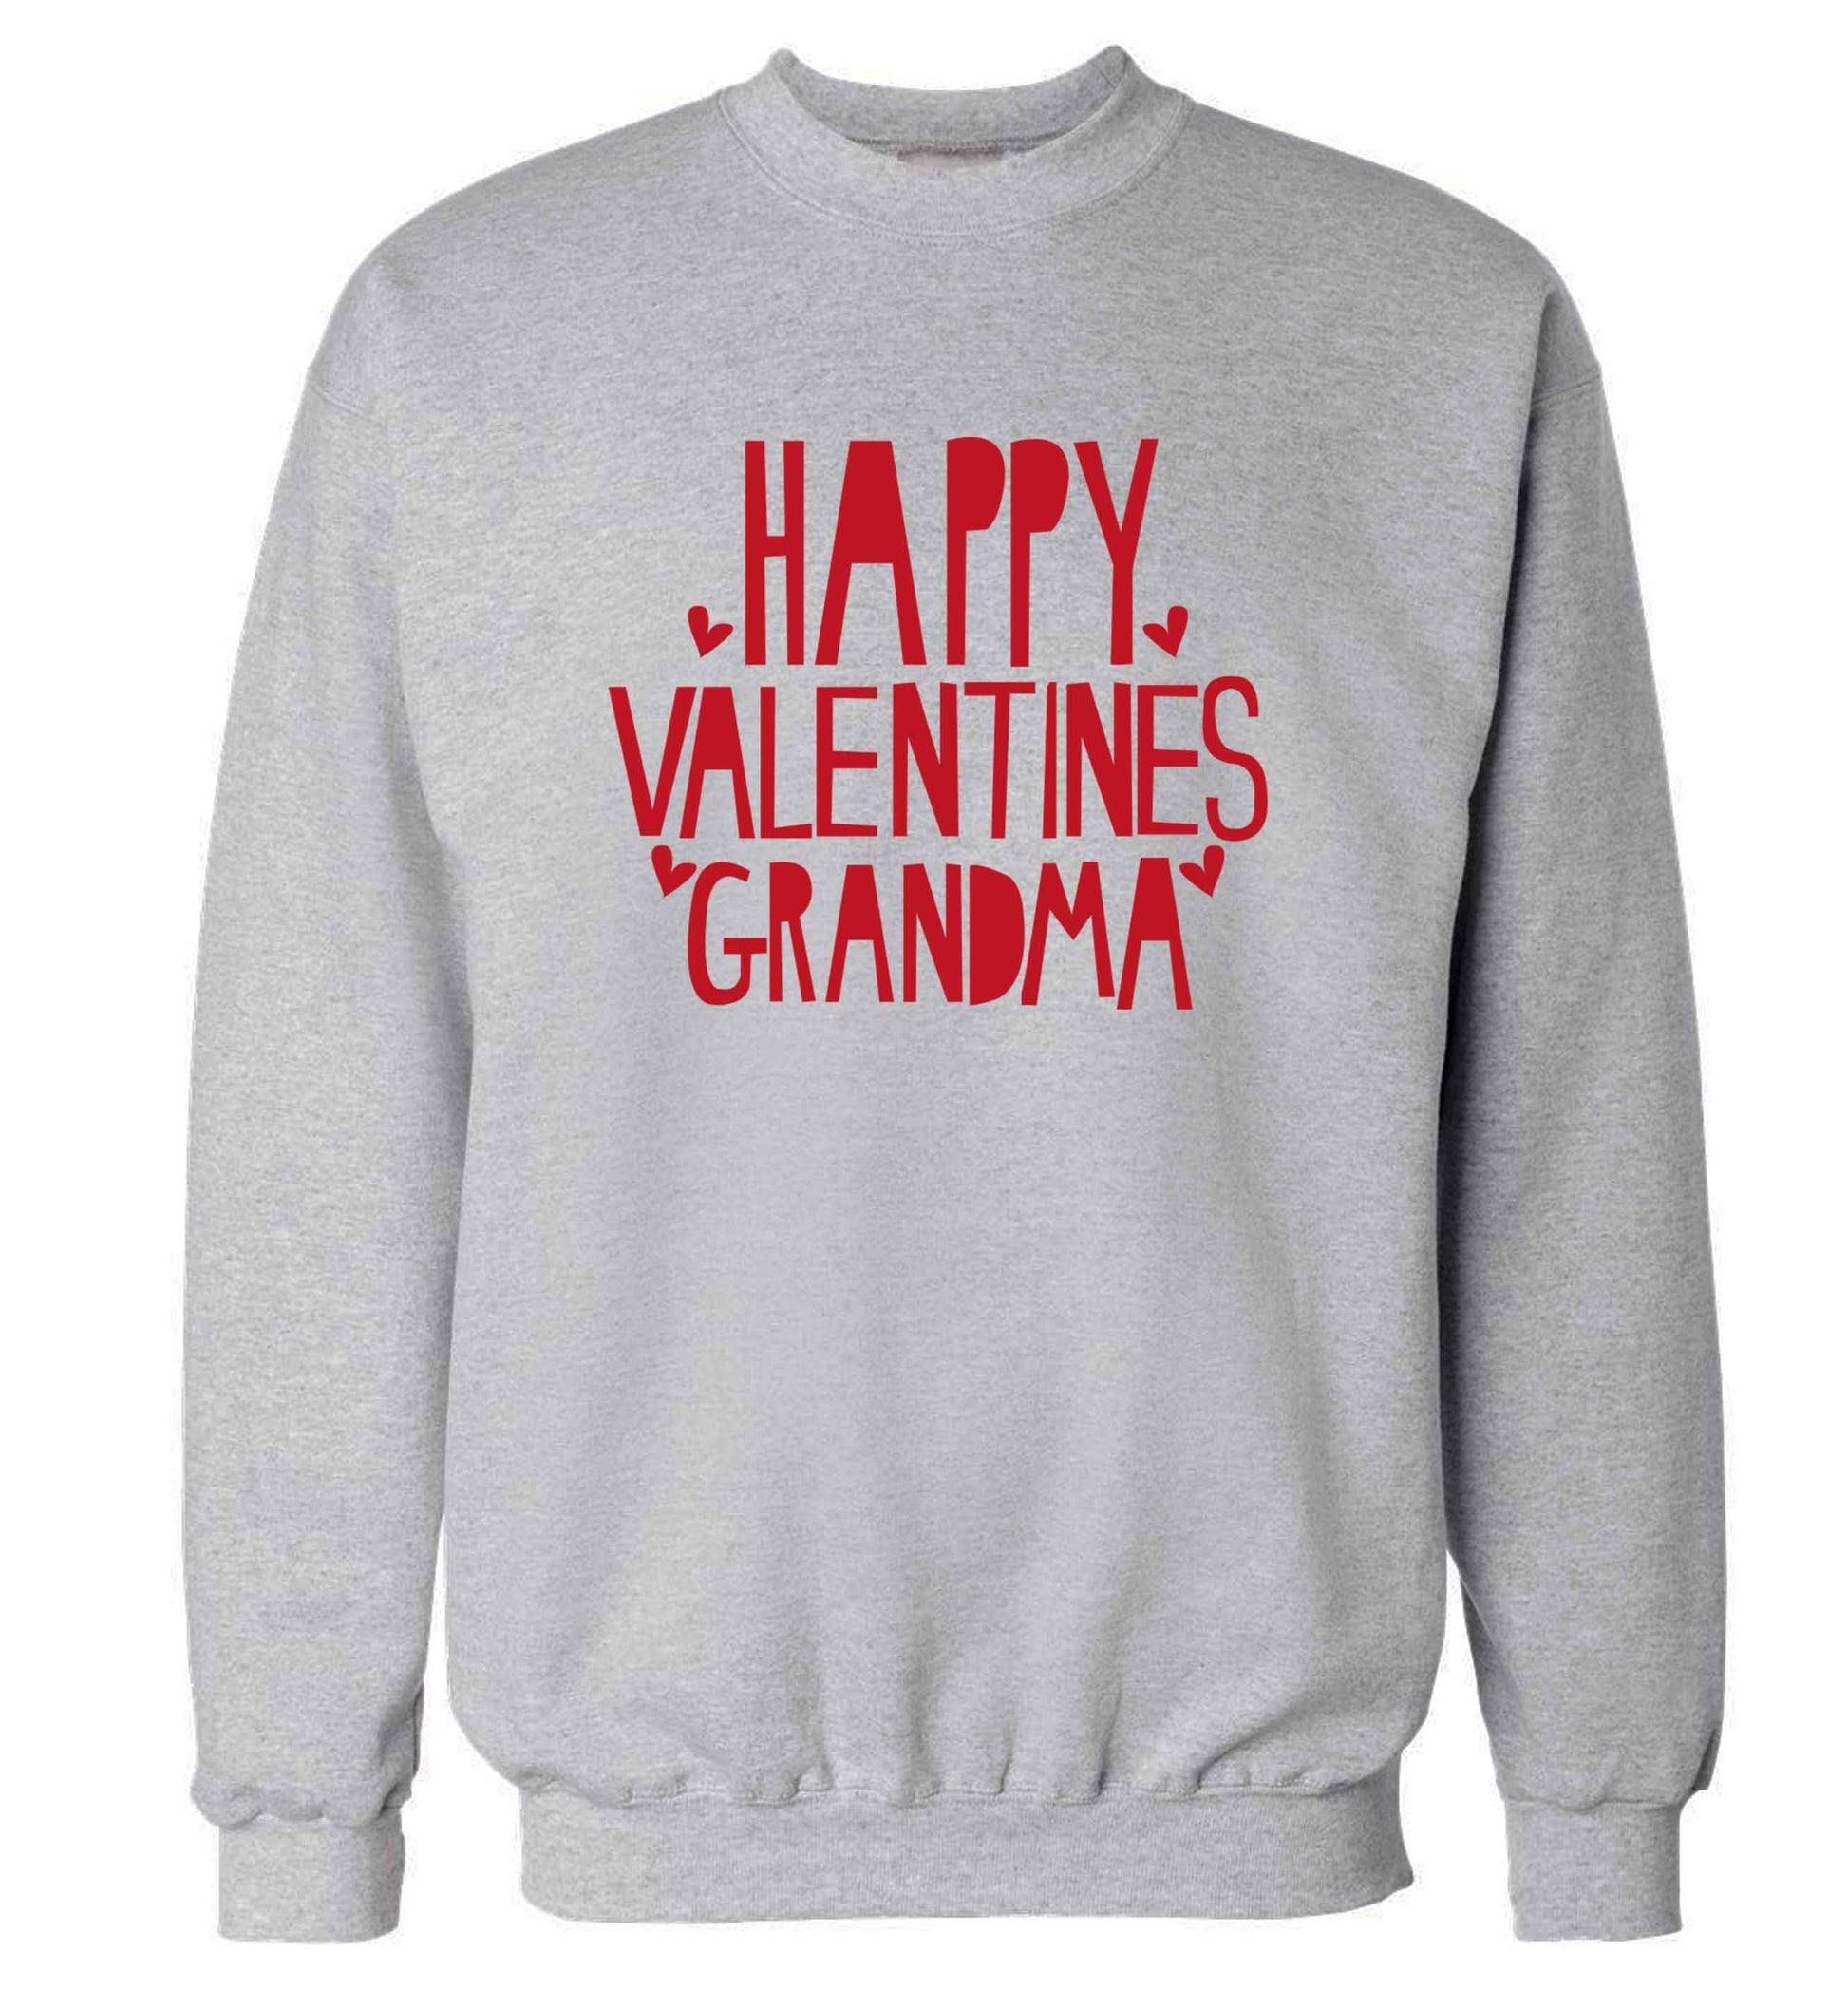 Happy valentines grandma adult's unisex grey sweater 2XL